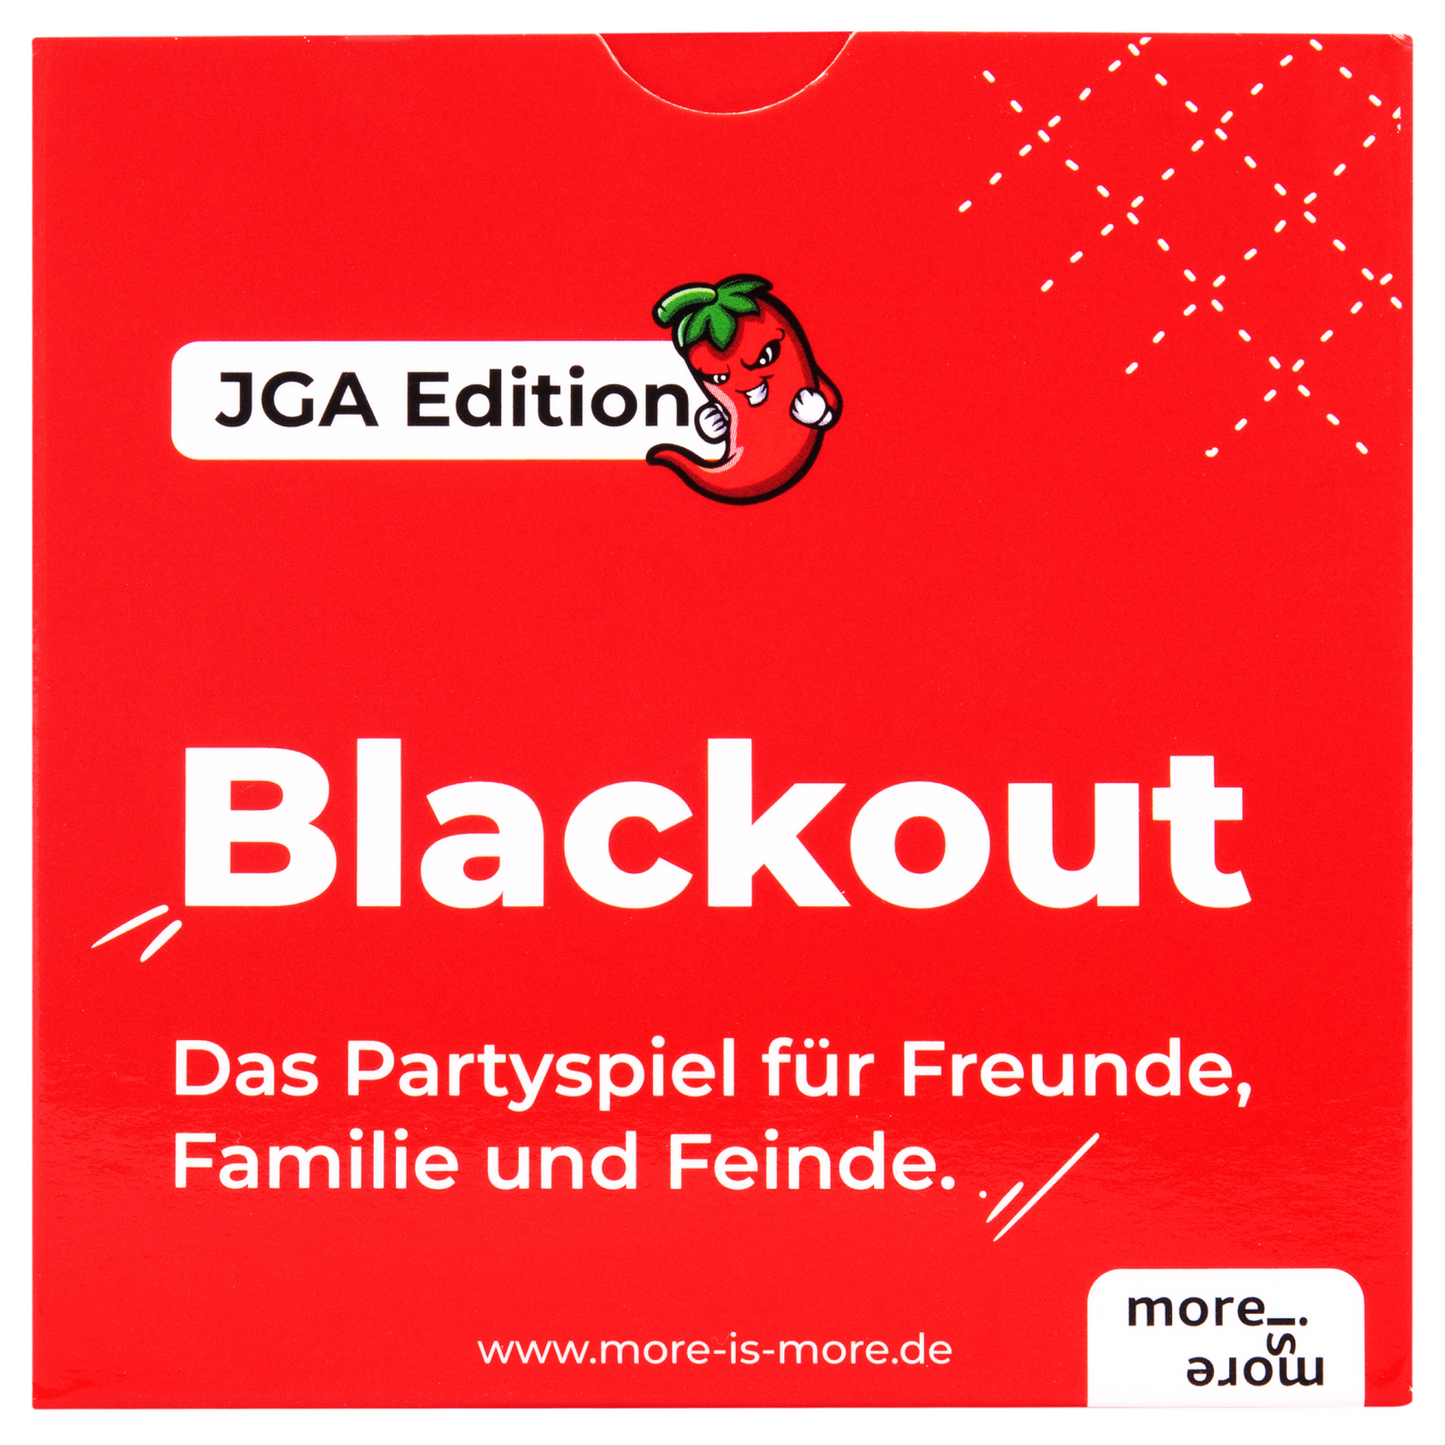 Blackout - JGA Edition